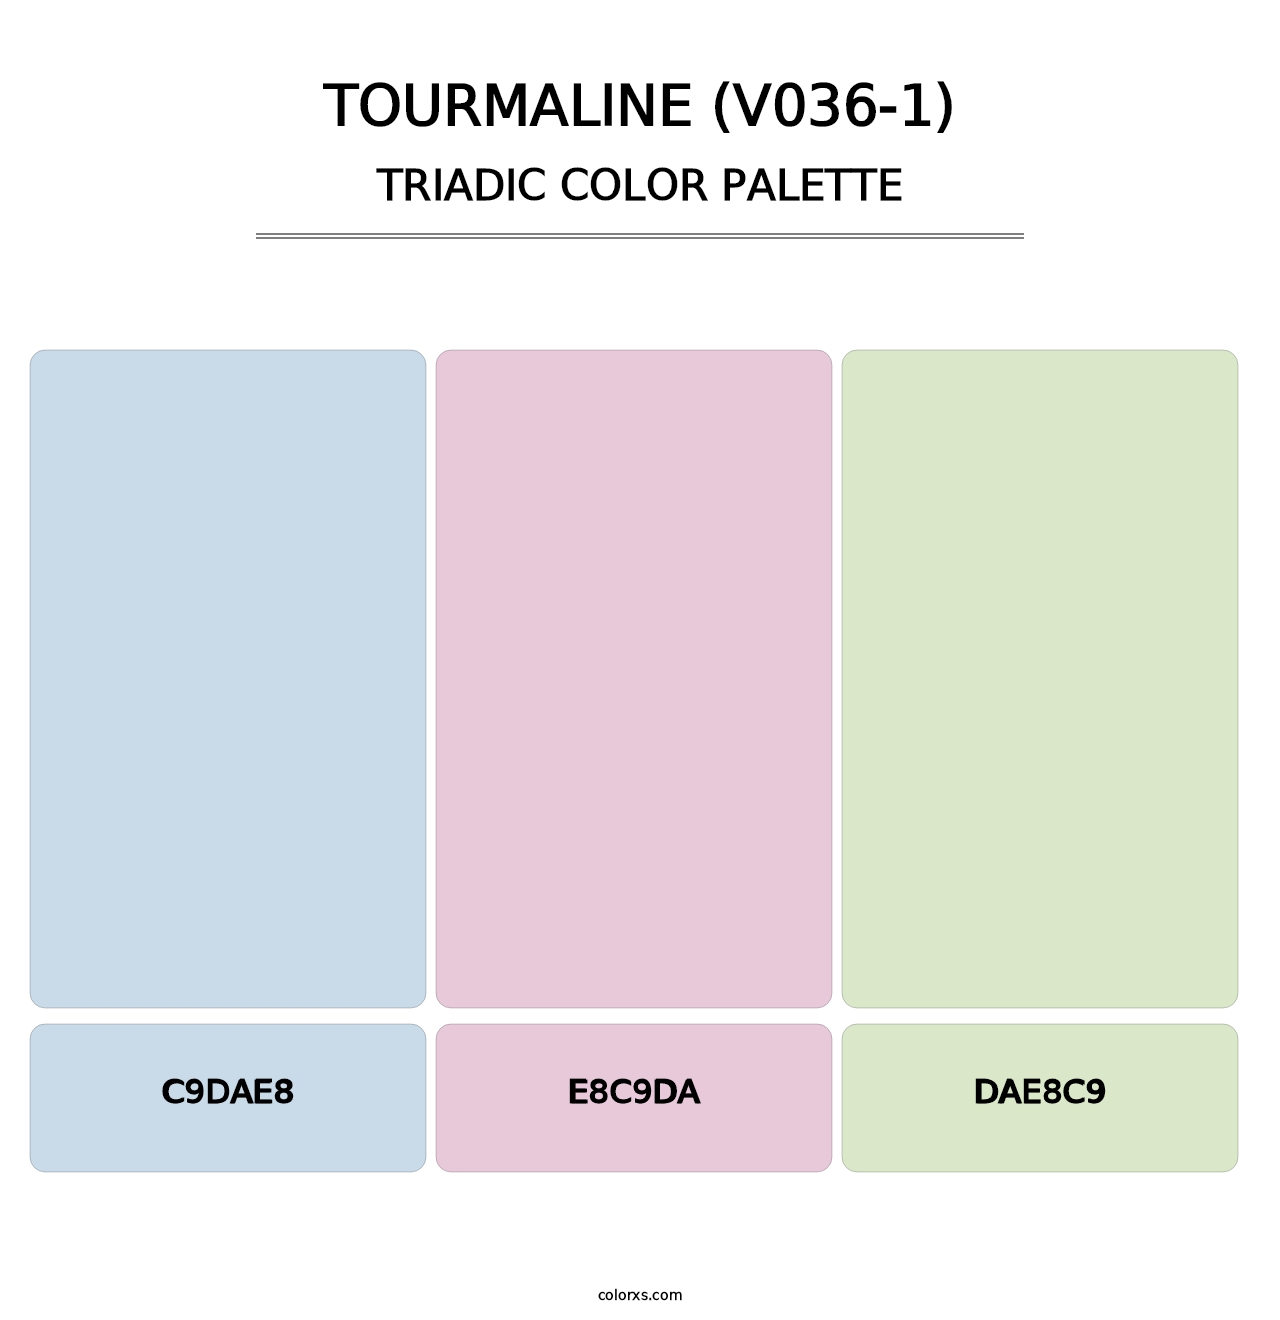 Tourmaline (V036-1) - Triadic Color Palette